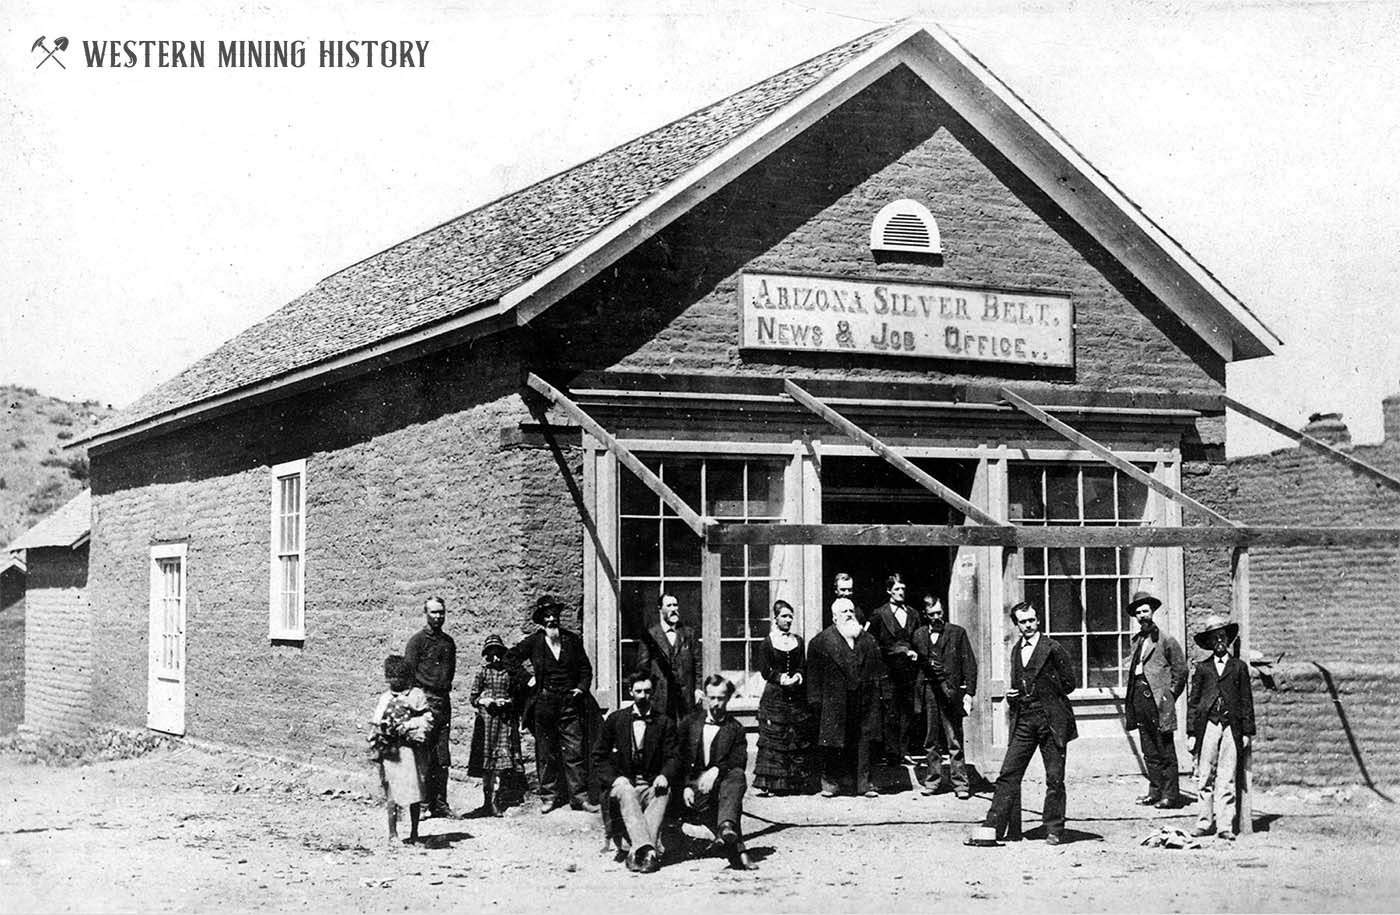 Arizona Silverbelt newspaper building at Globe, Arizona ca. 1880s